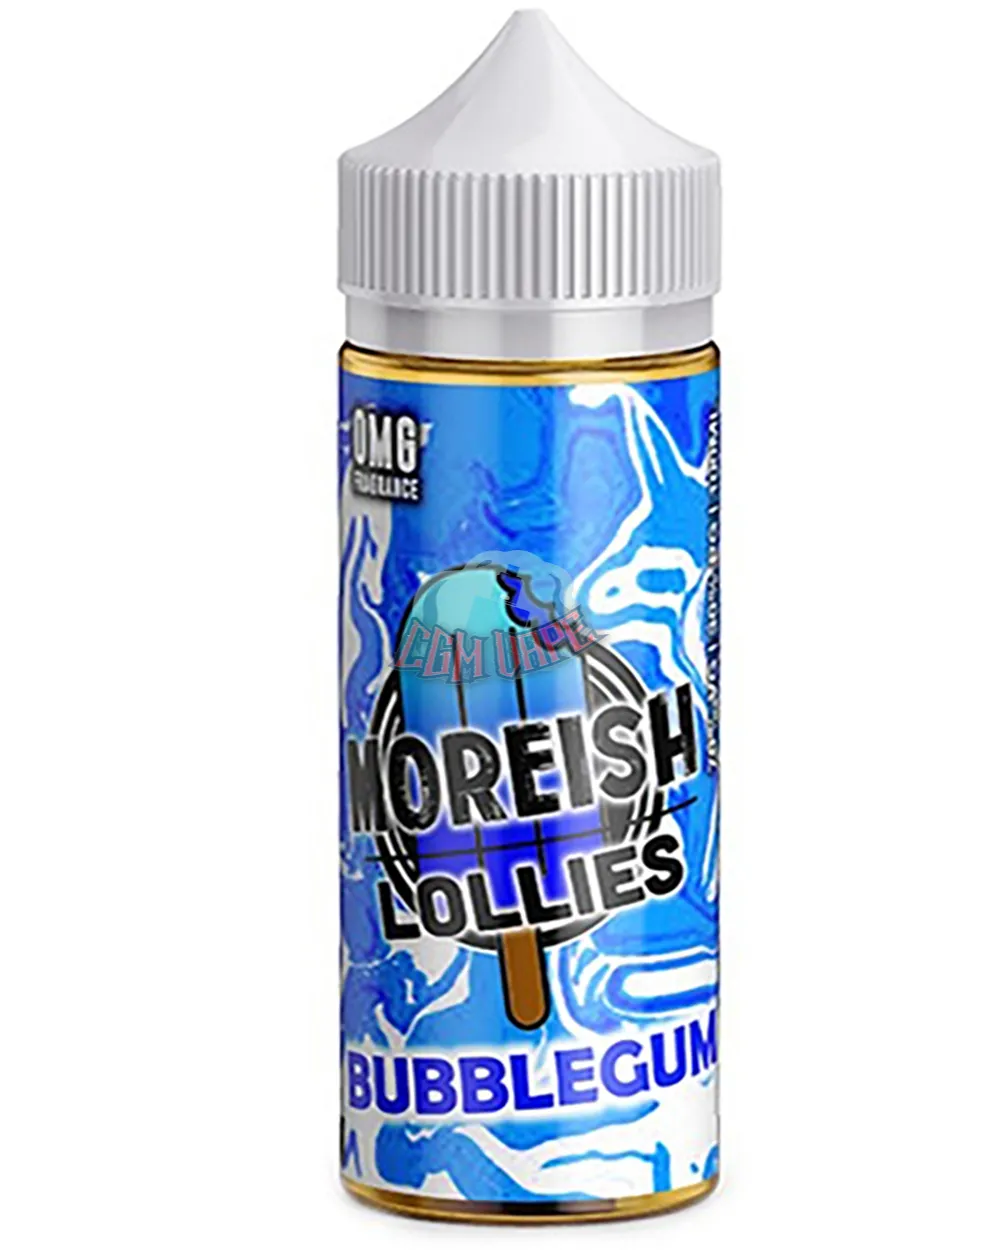 Moreish Lollies Bubblegum